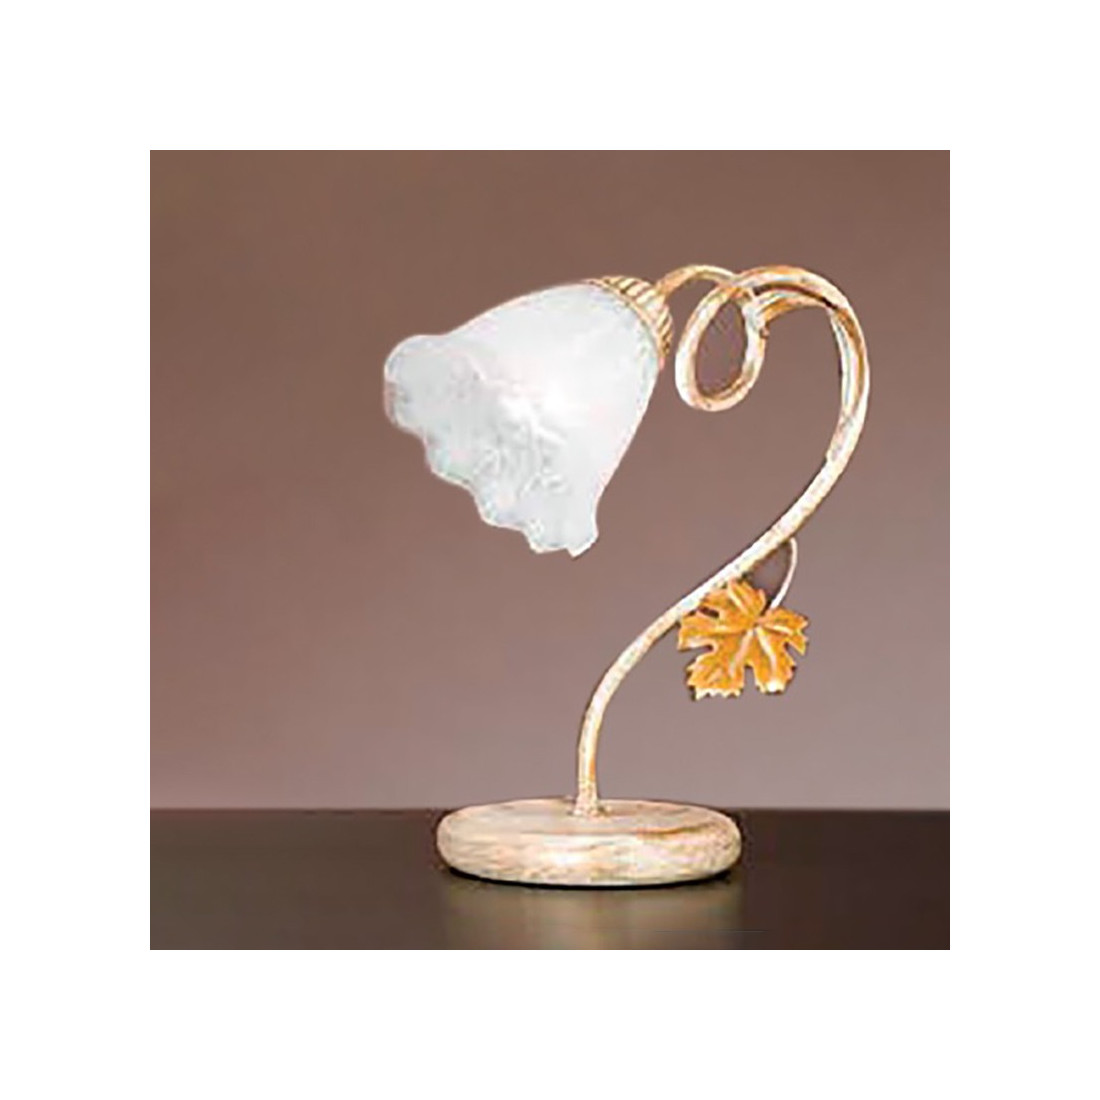 Abat-jour DP-AIDA L E14 LED metallo avorio ruggine vetro fiore lampada tavolo classica floreale interno